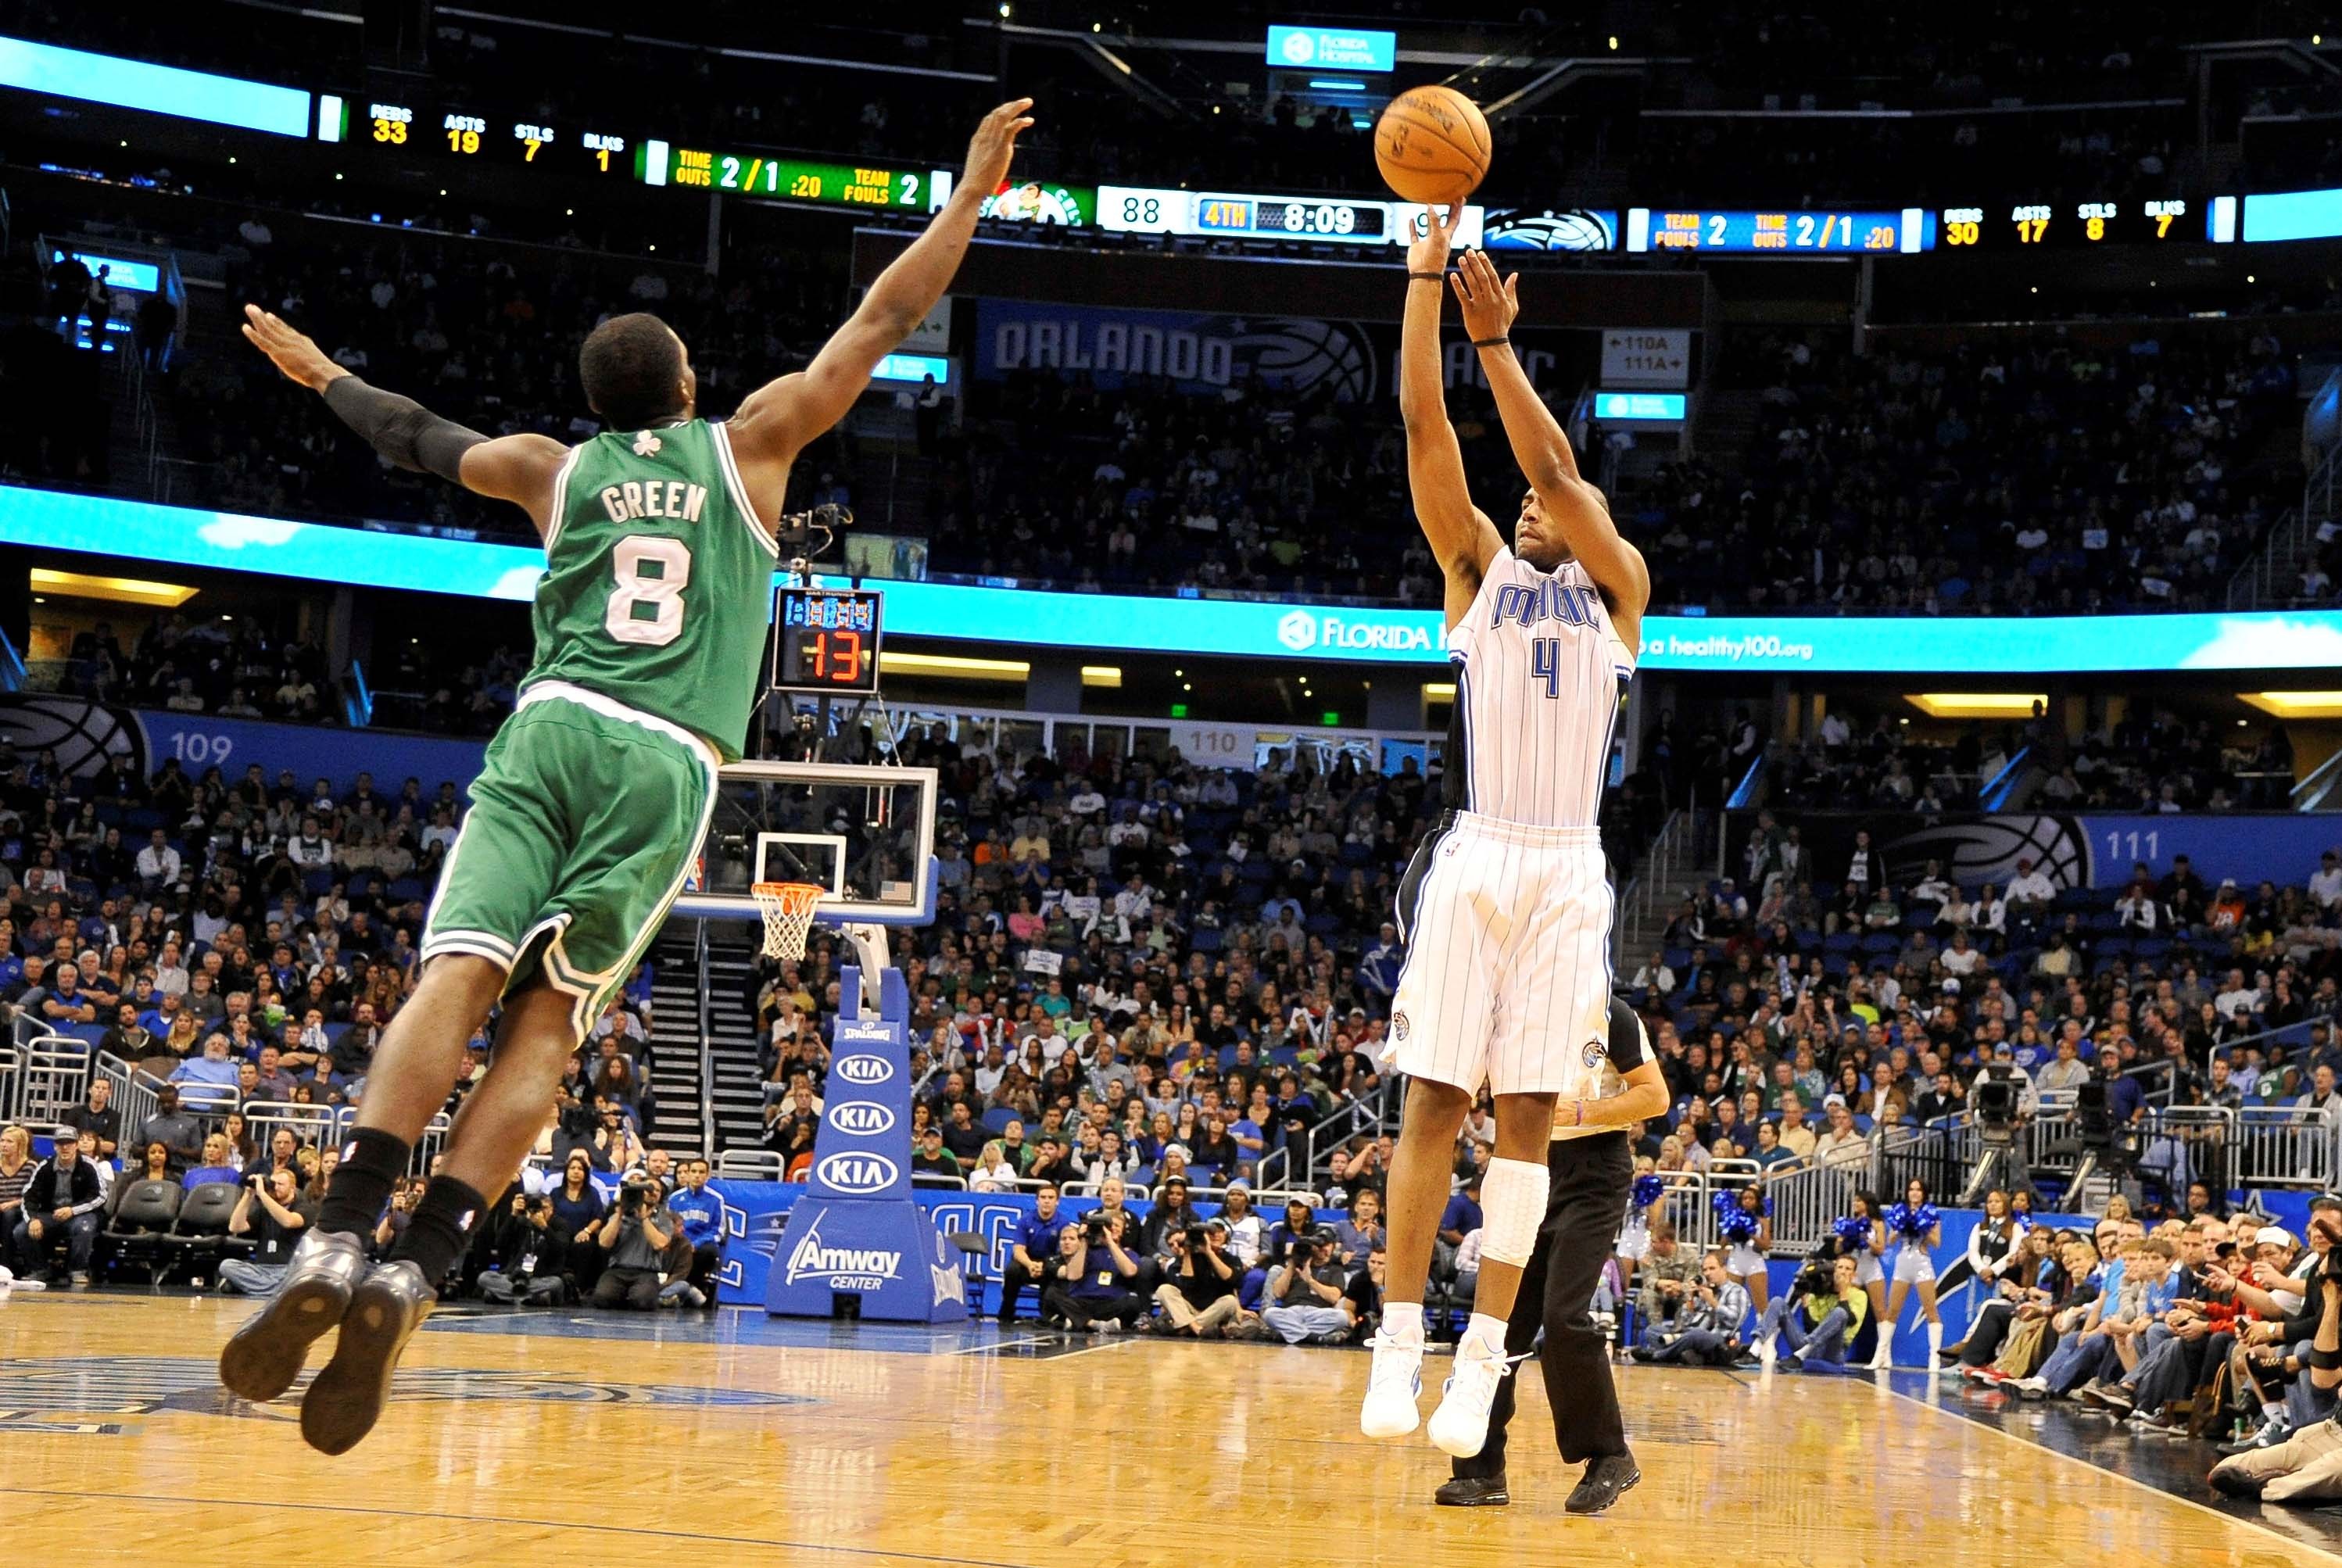 Orlando Magic vs. Boston Celtics Preview, Analysis and Predictions